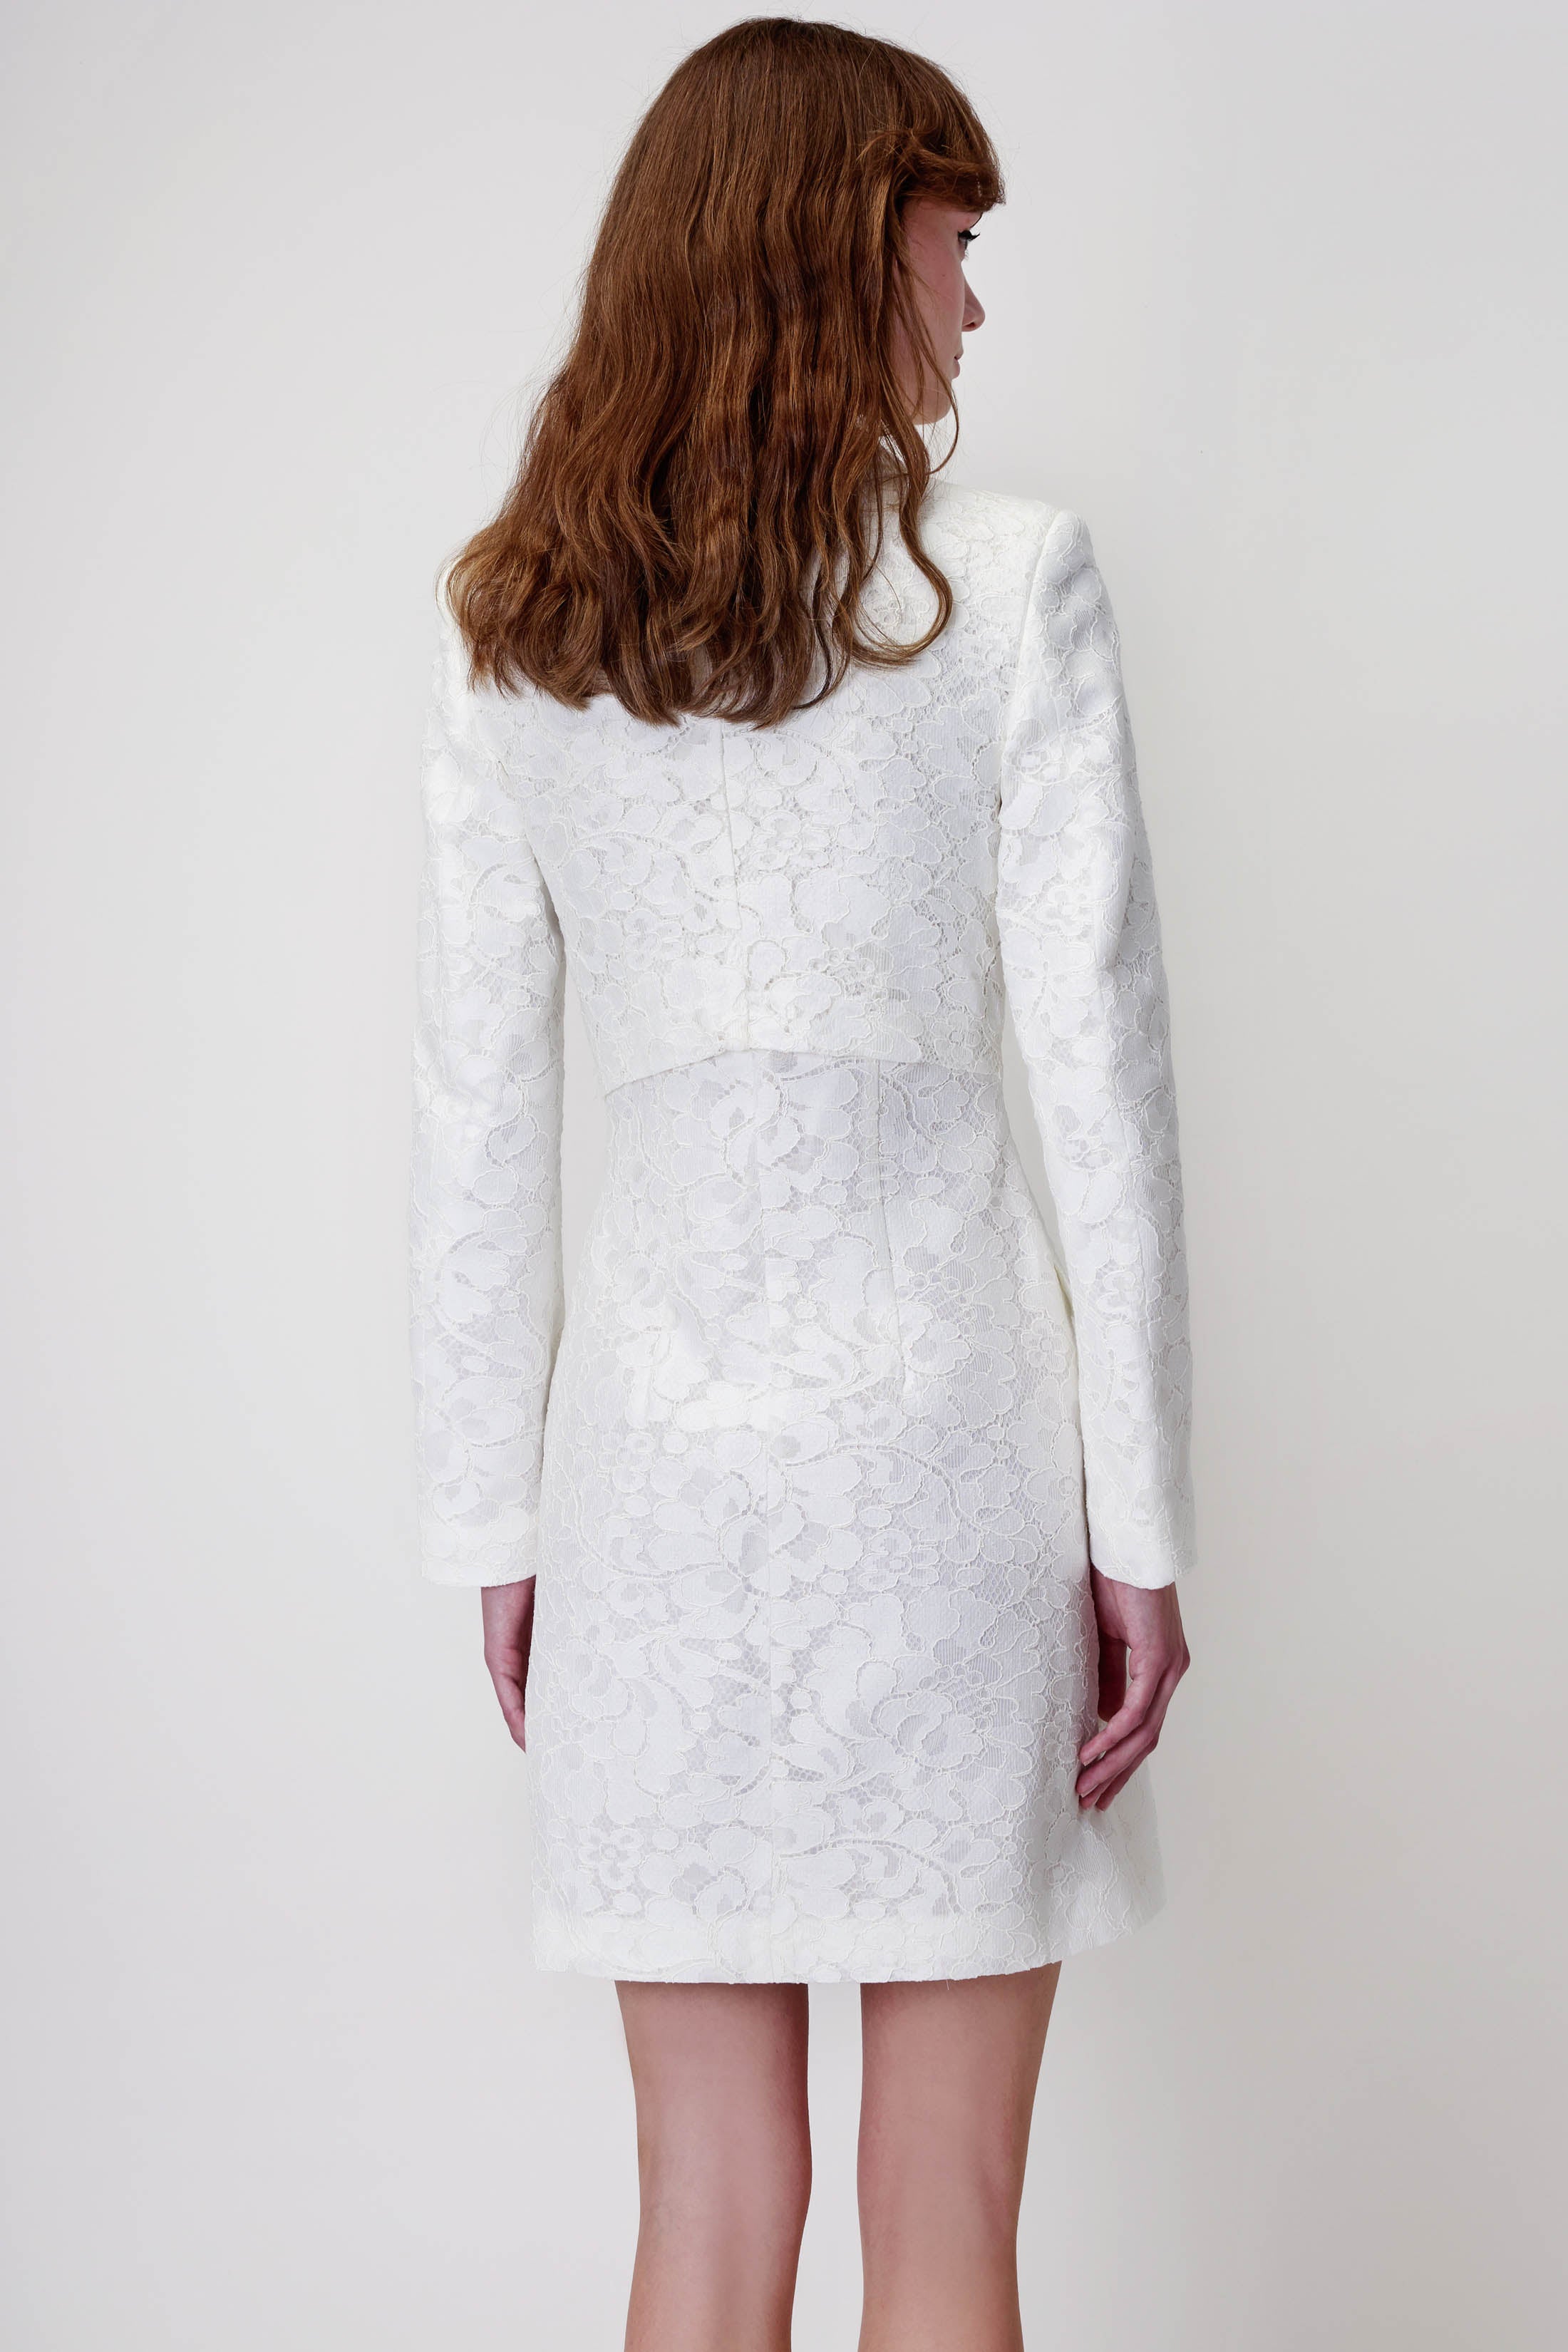 Lace Blazer Dress in White